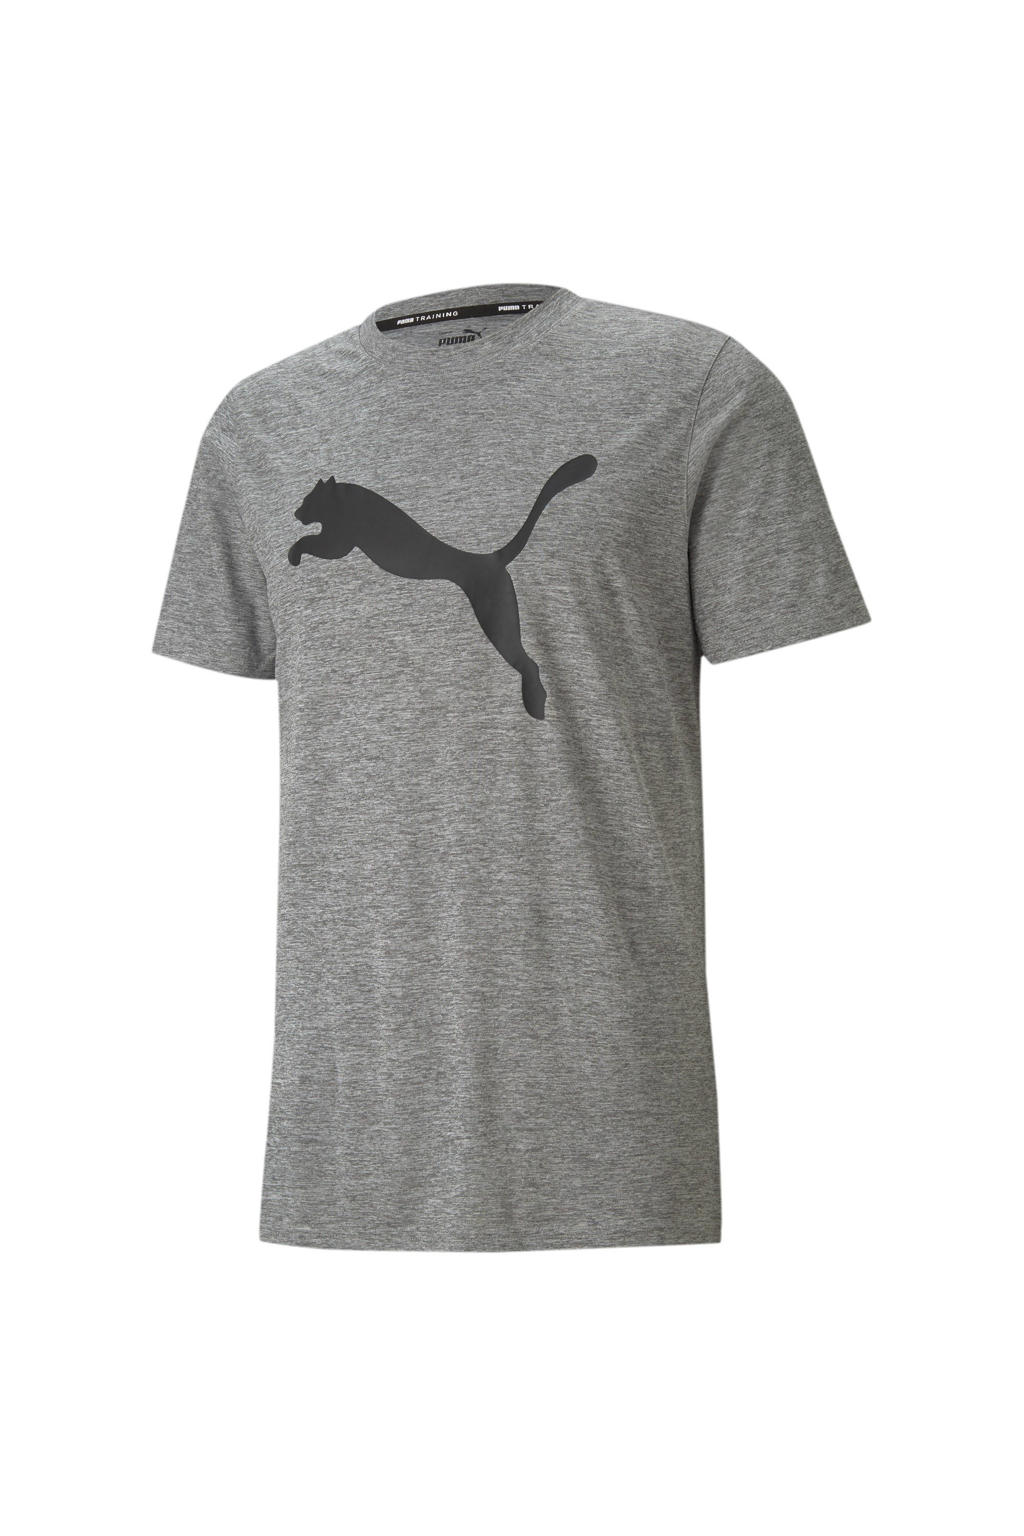 Puma   sport T-shirt grijs